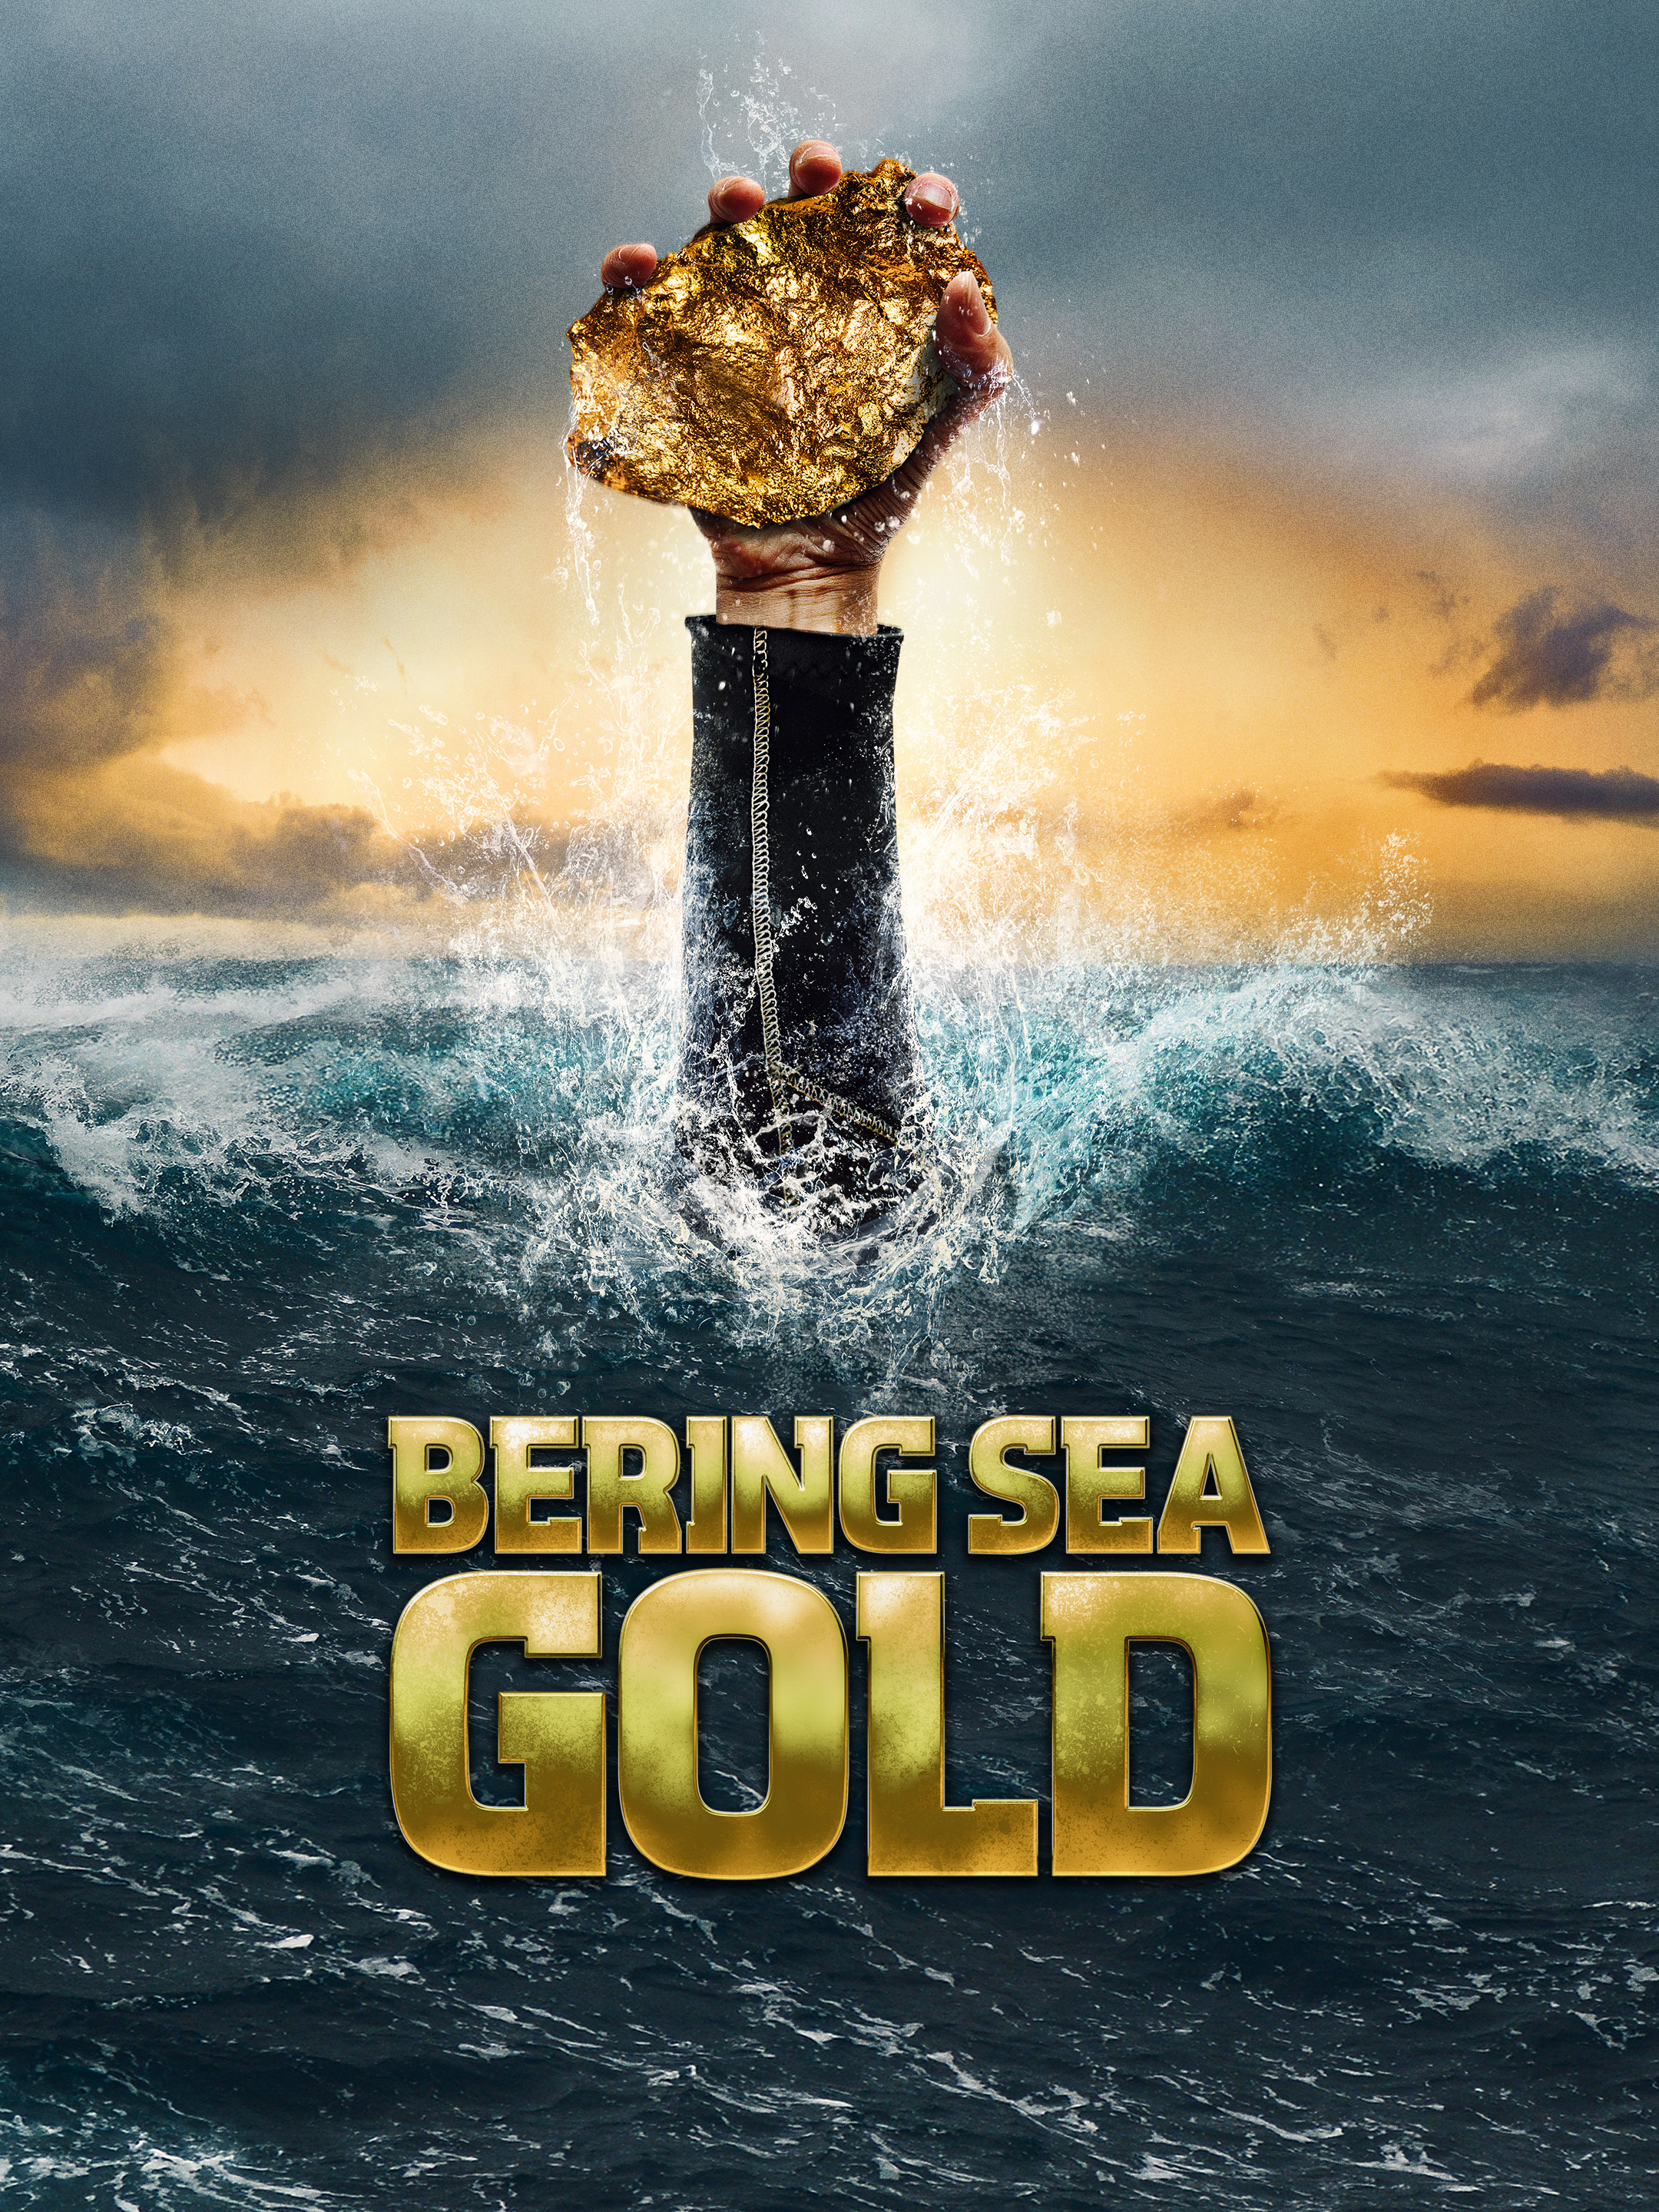 Gold zeke 2018 on what to happened bering sea 'Bering Sea